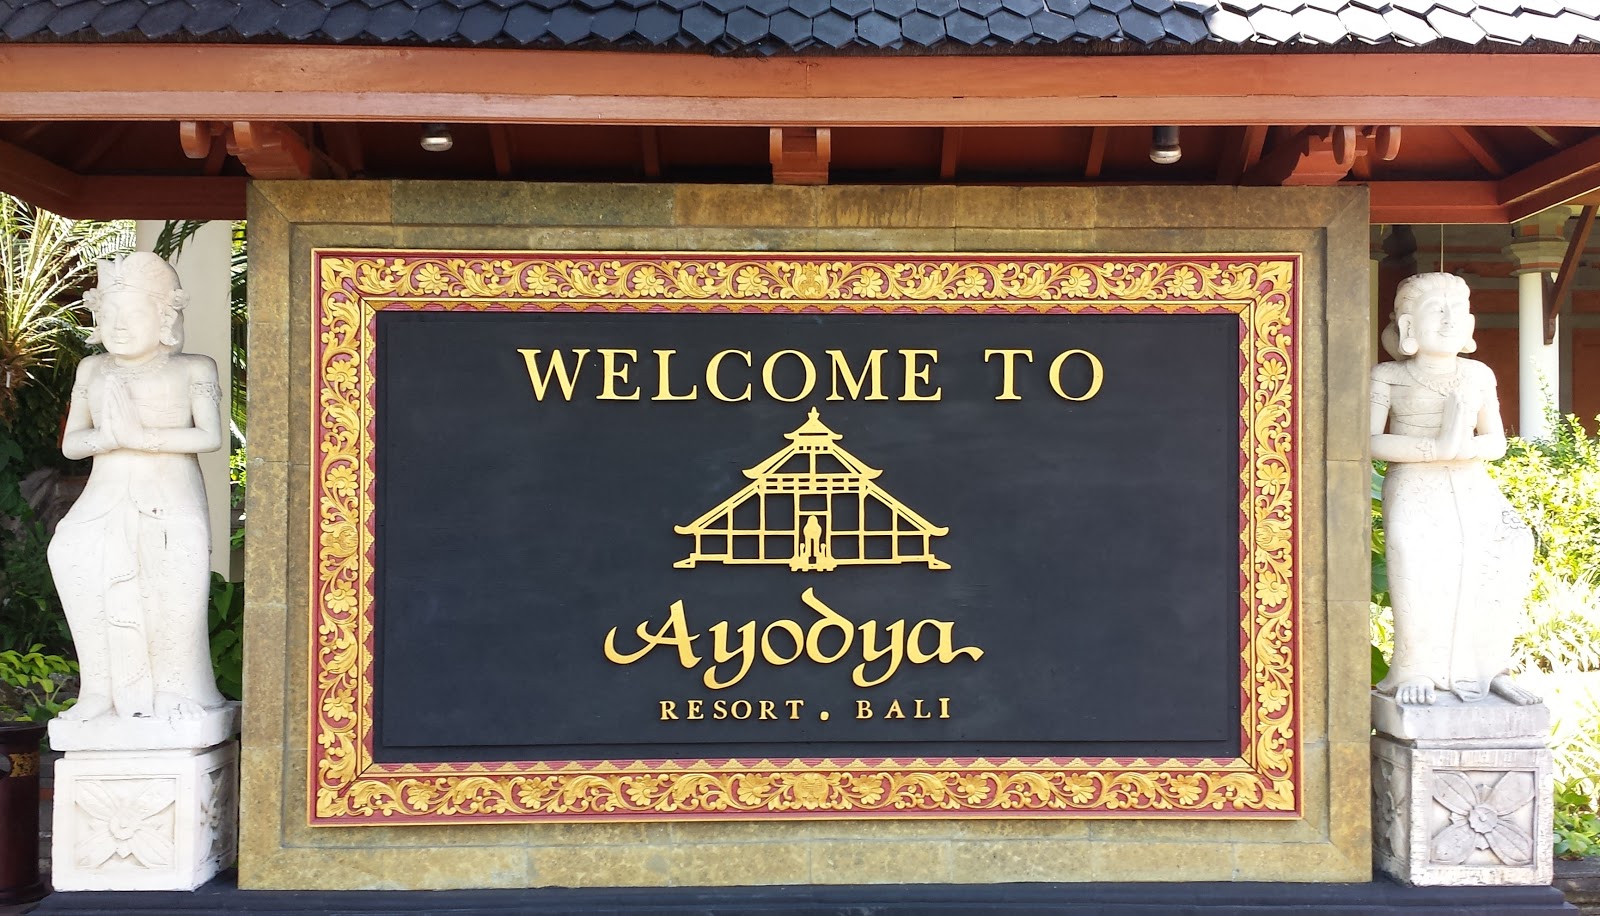 Ayodya Resort Bali: Where to Stay in Bali, Indonesia